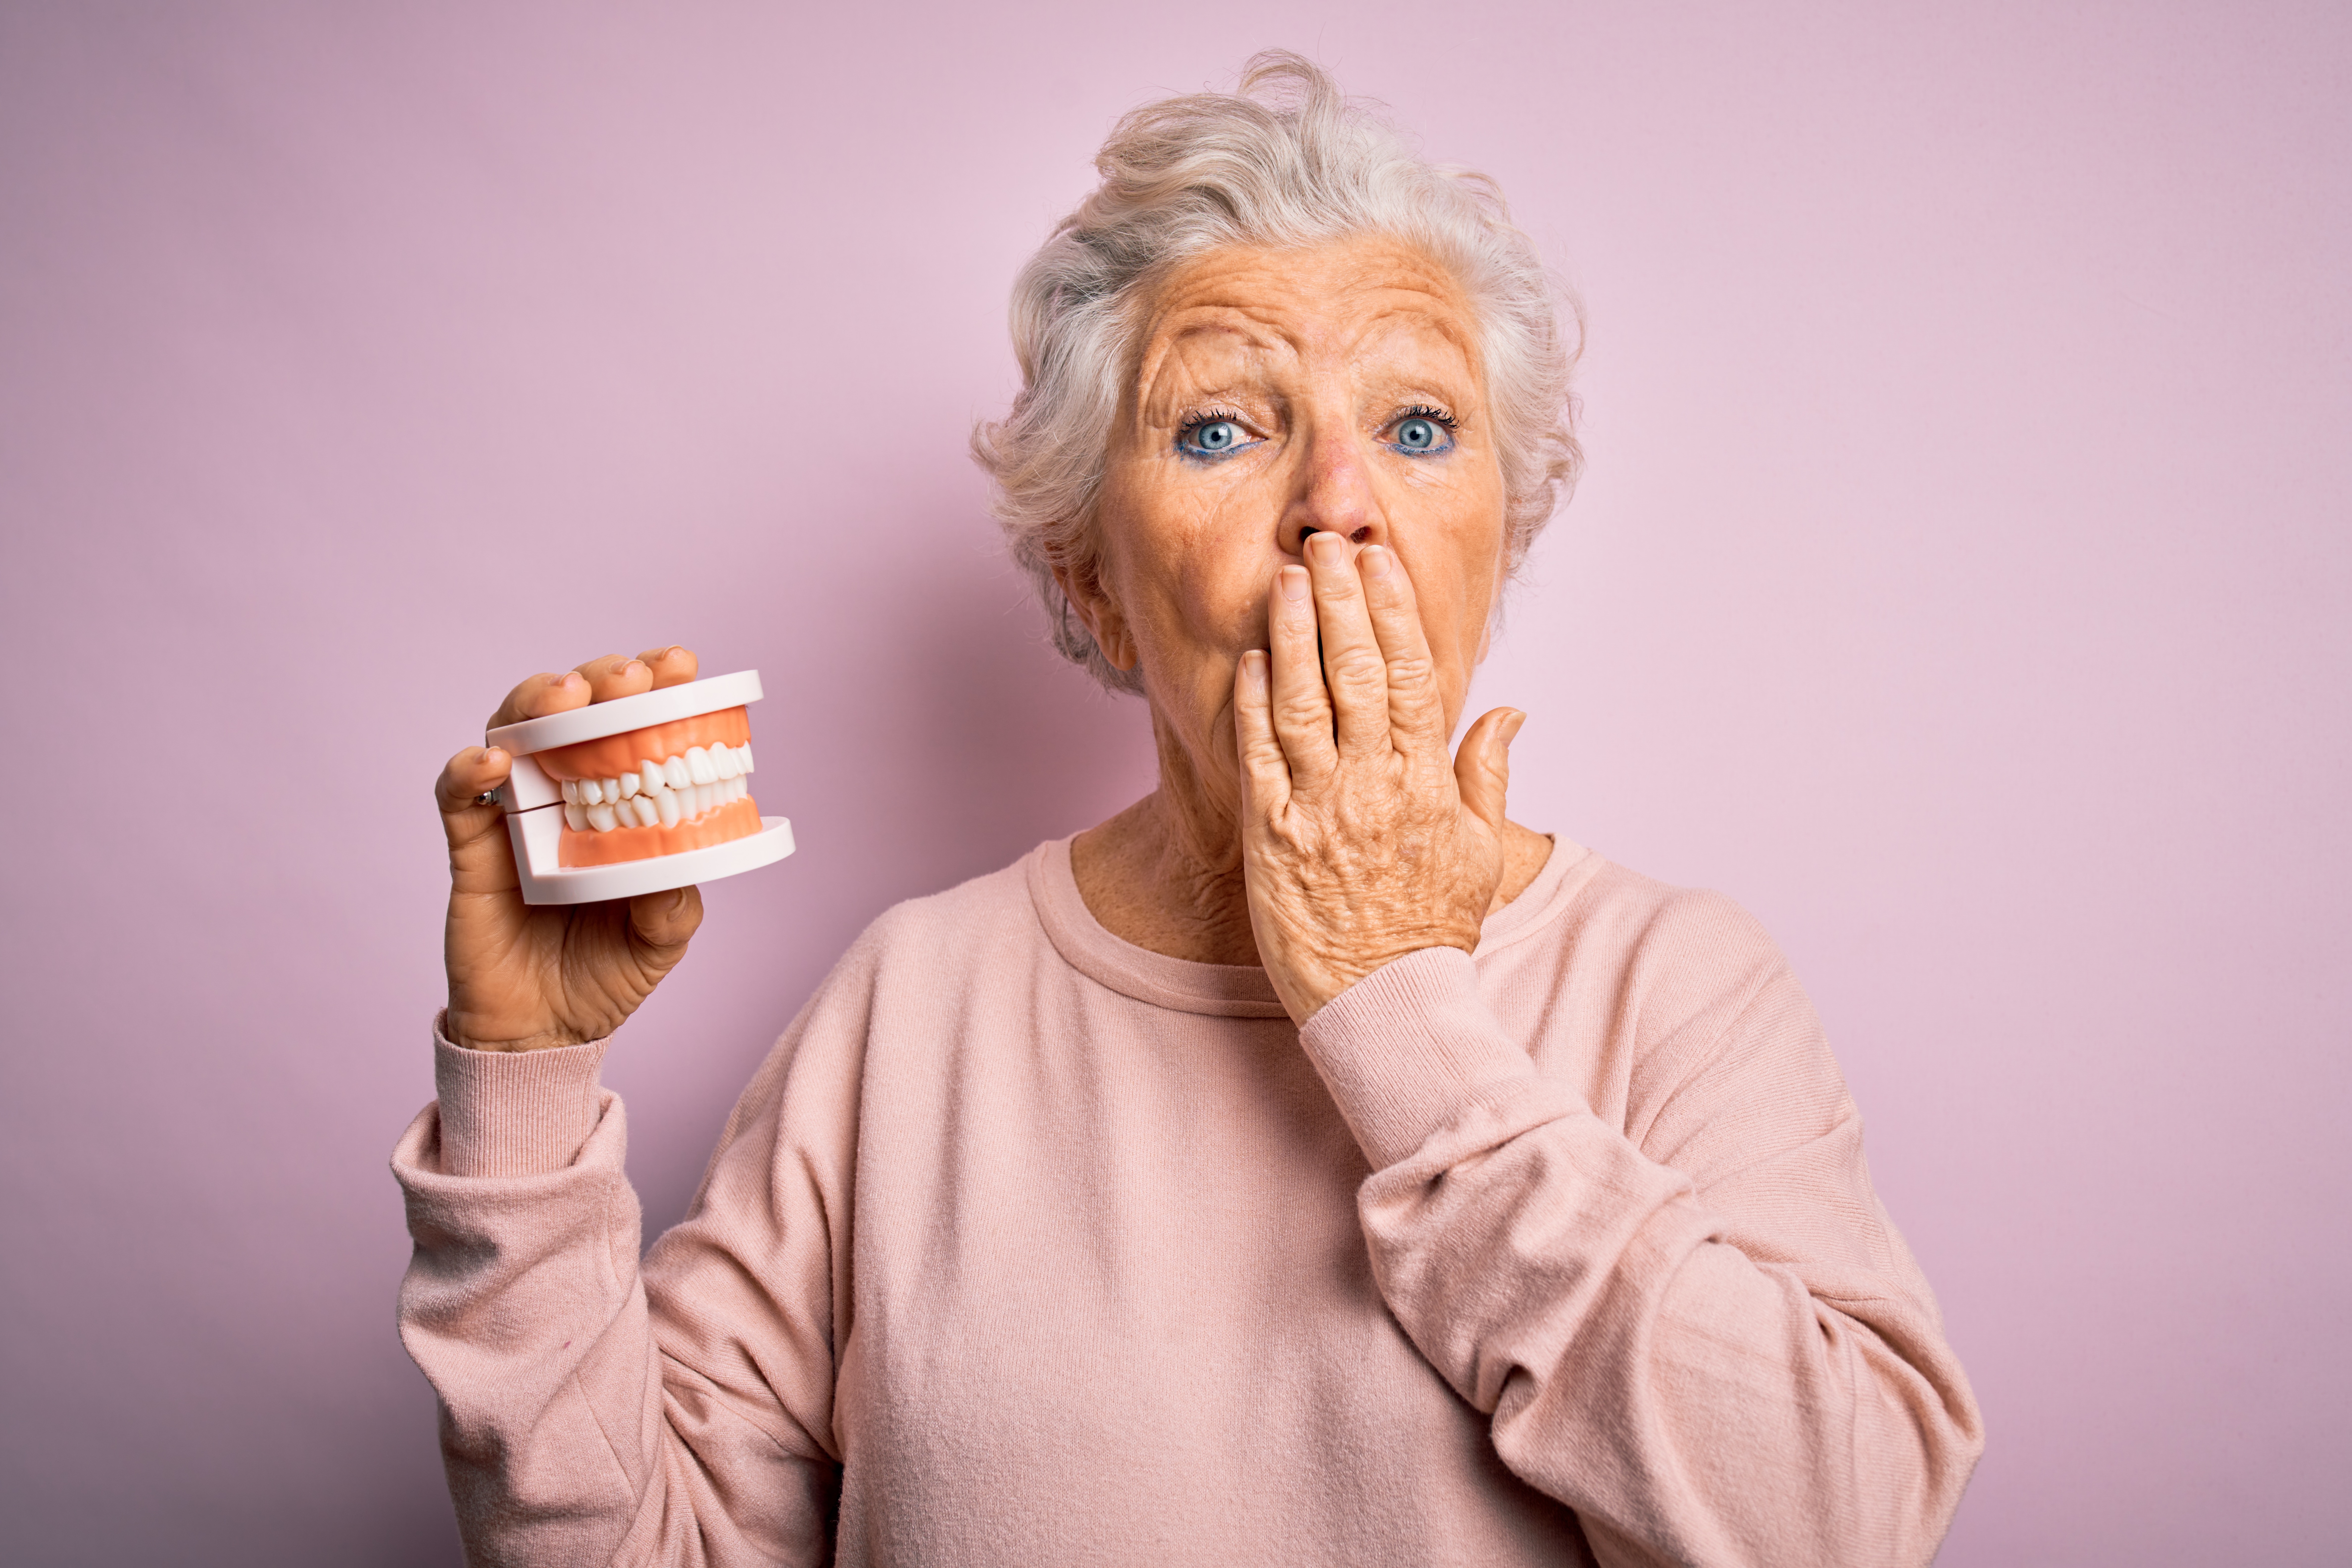 Shocked senior woman with dentures